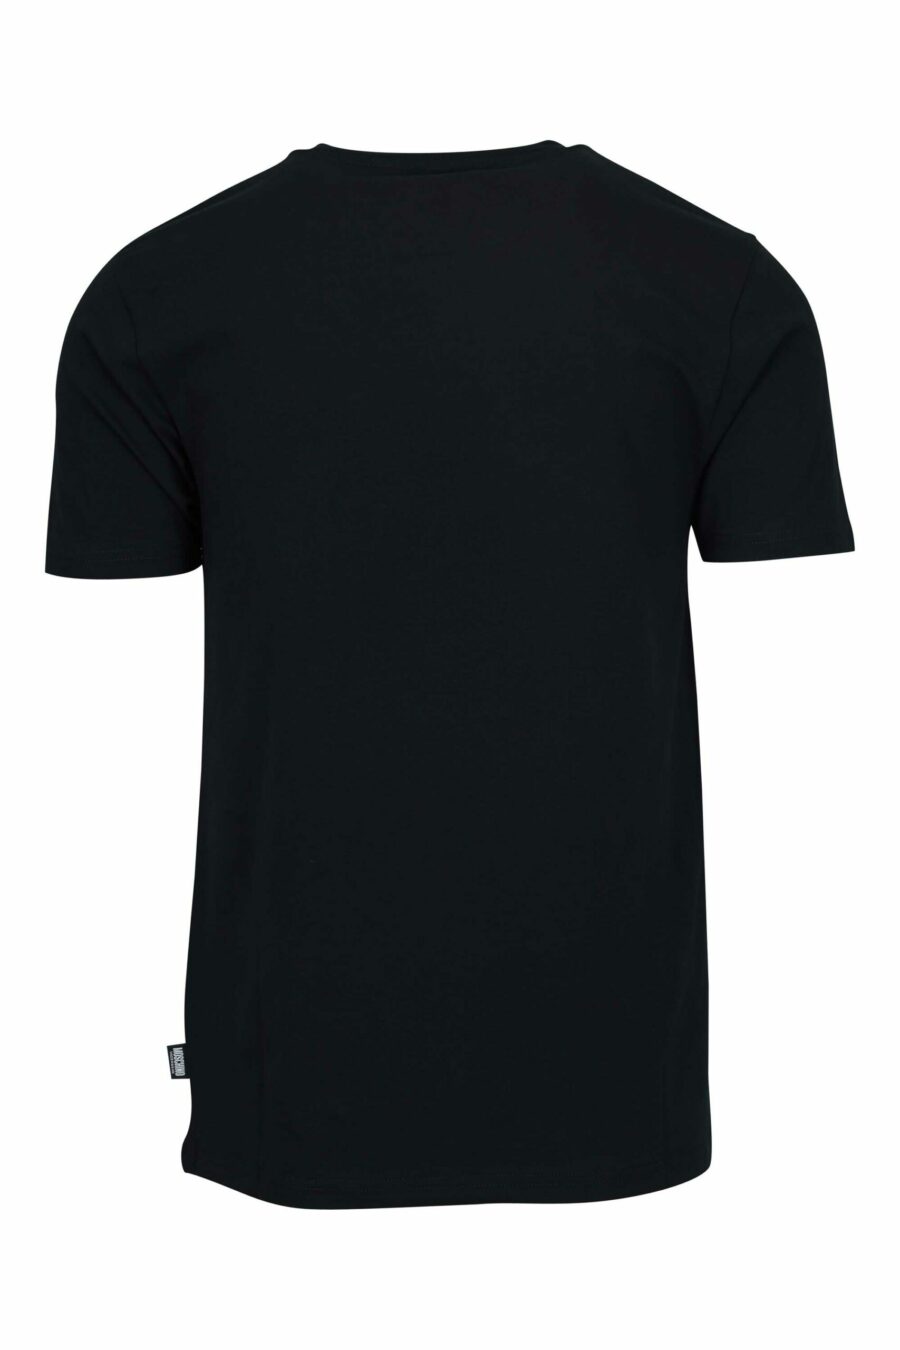 T-shirt preta com mini logótipo de urso "underbear" - 667113605739 1 scaled